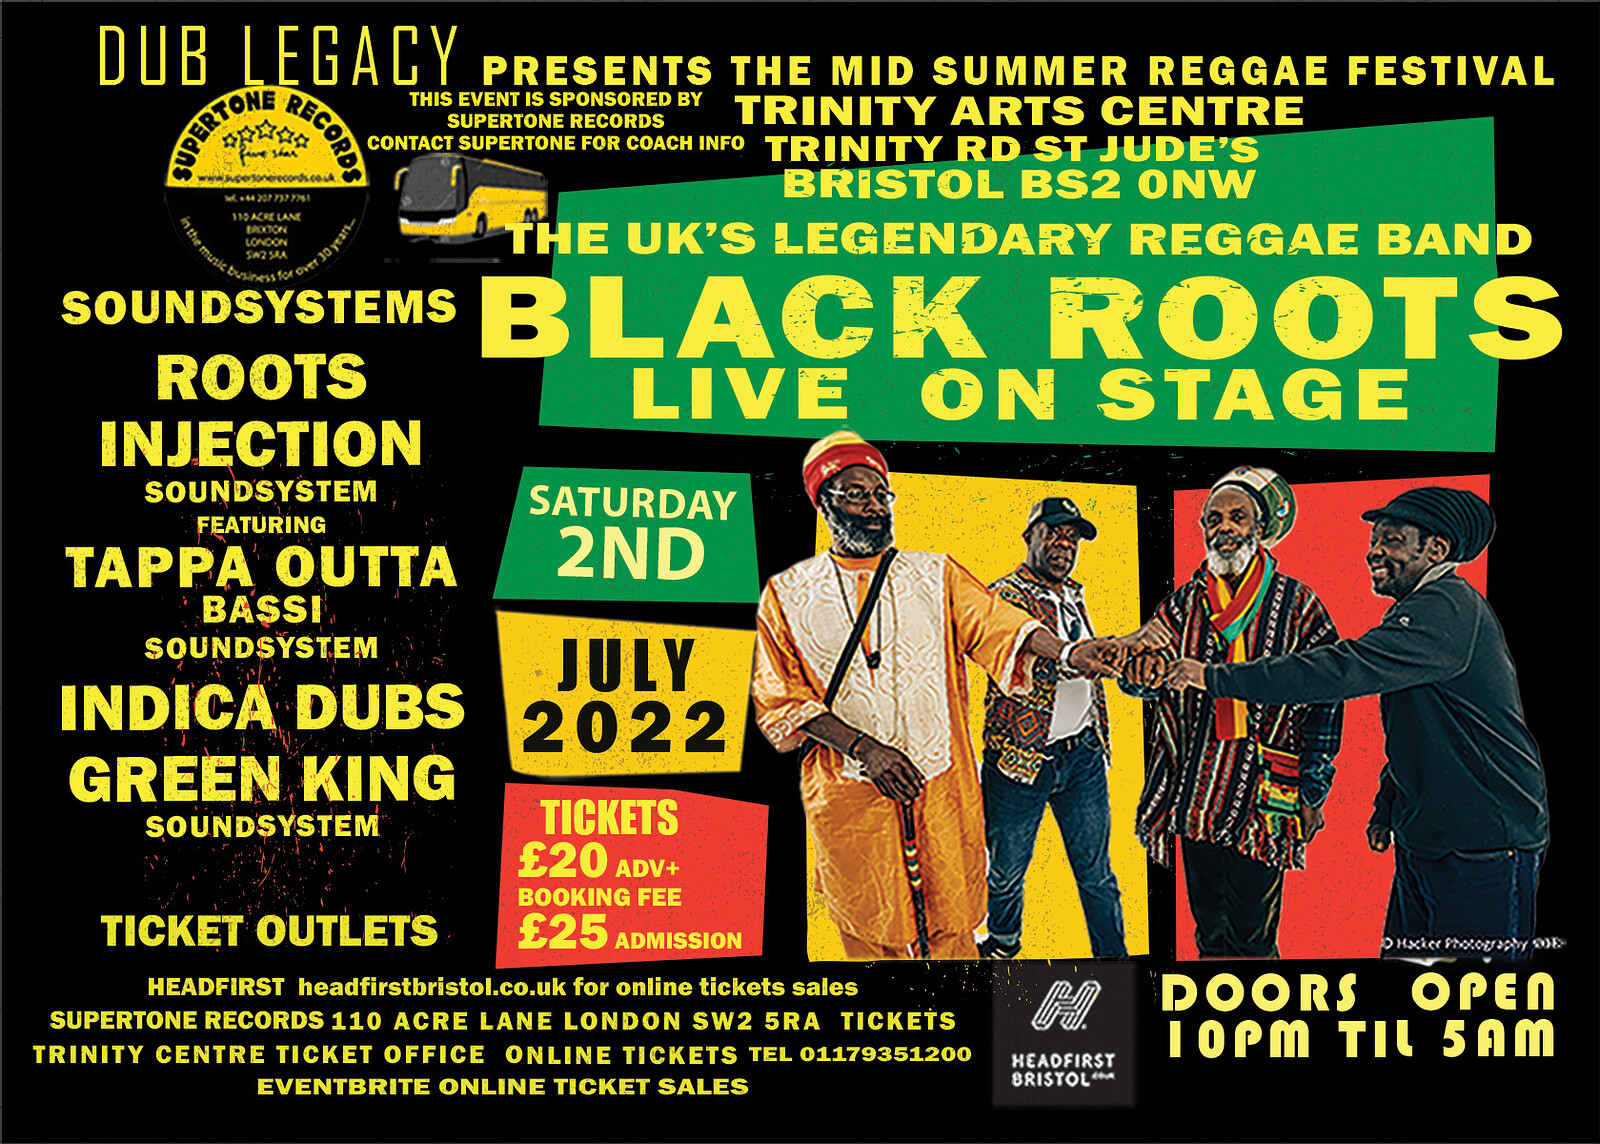 Dub Legacy The mid summer reggae festival at The Trinity Centre